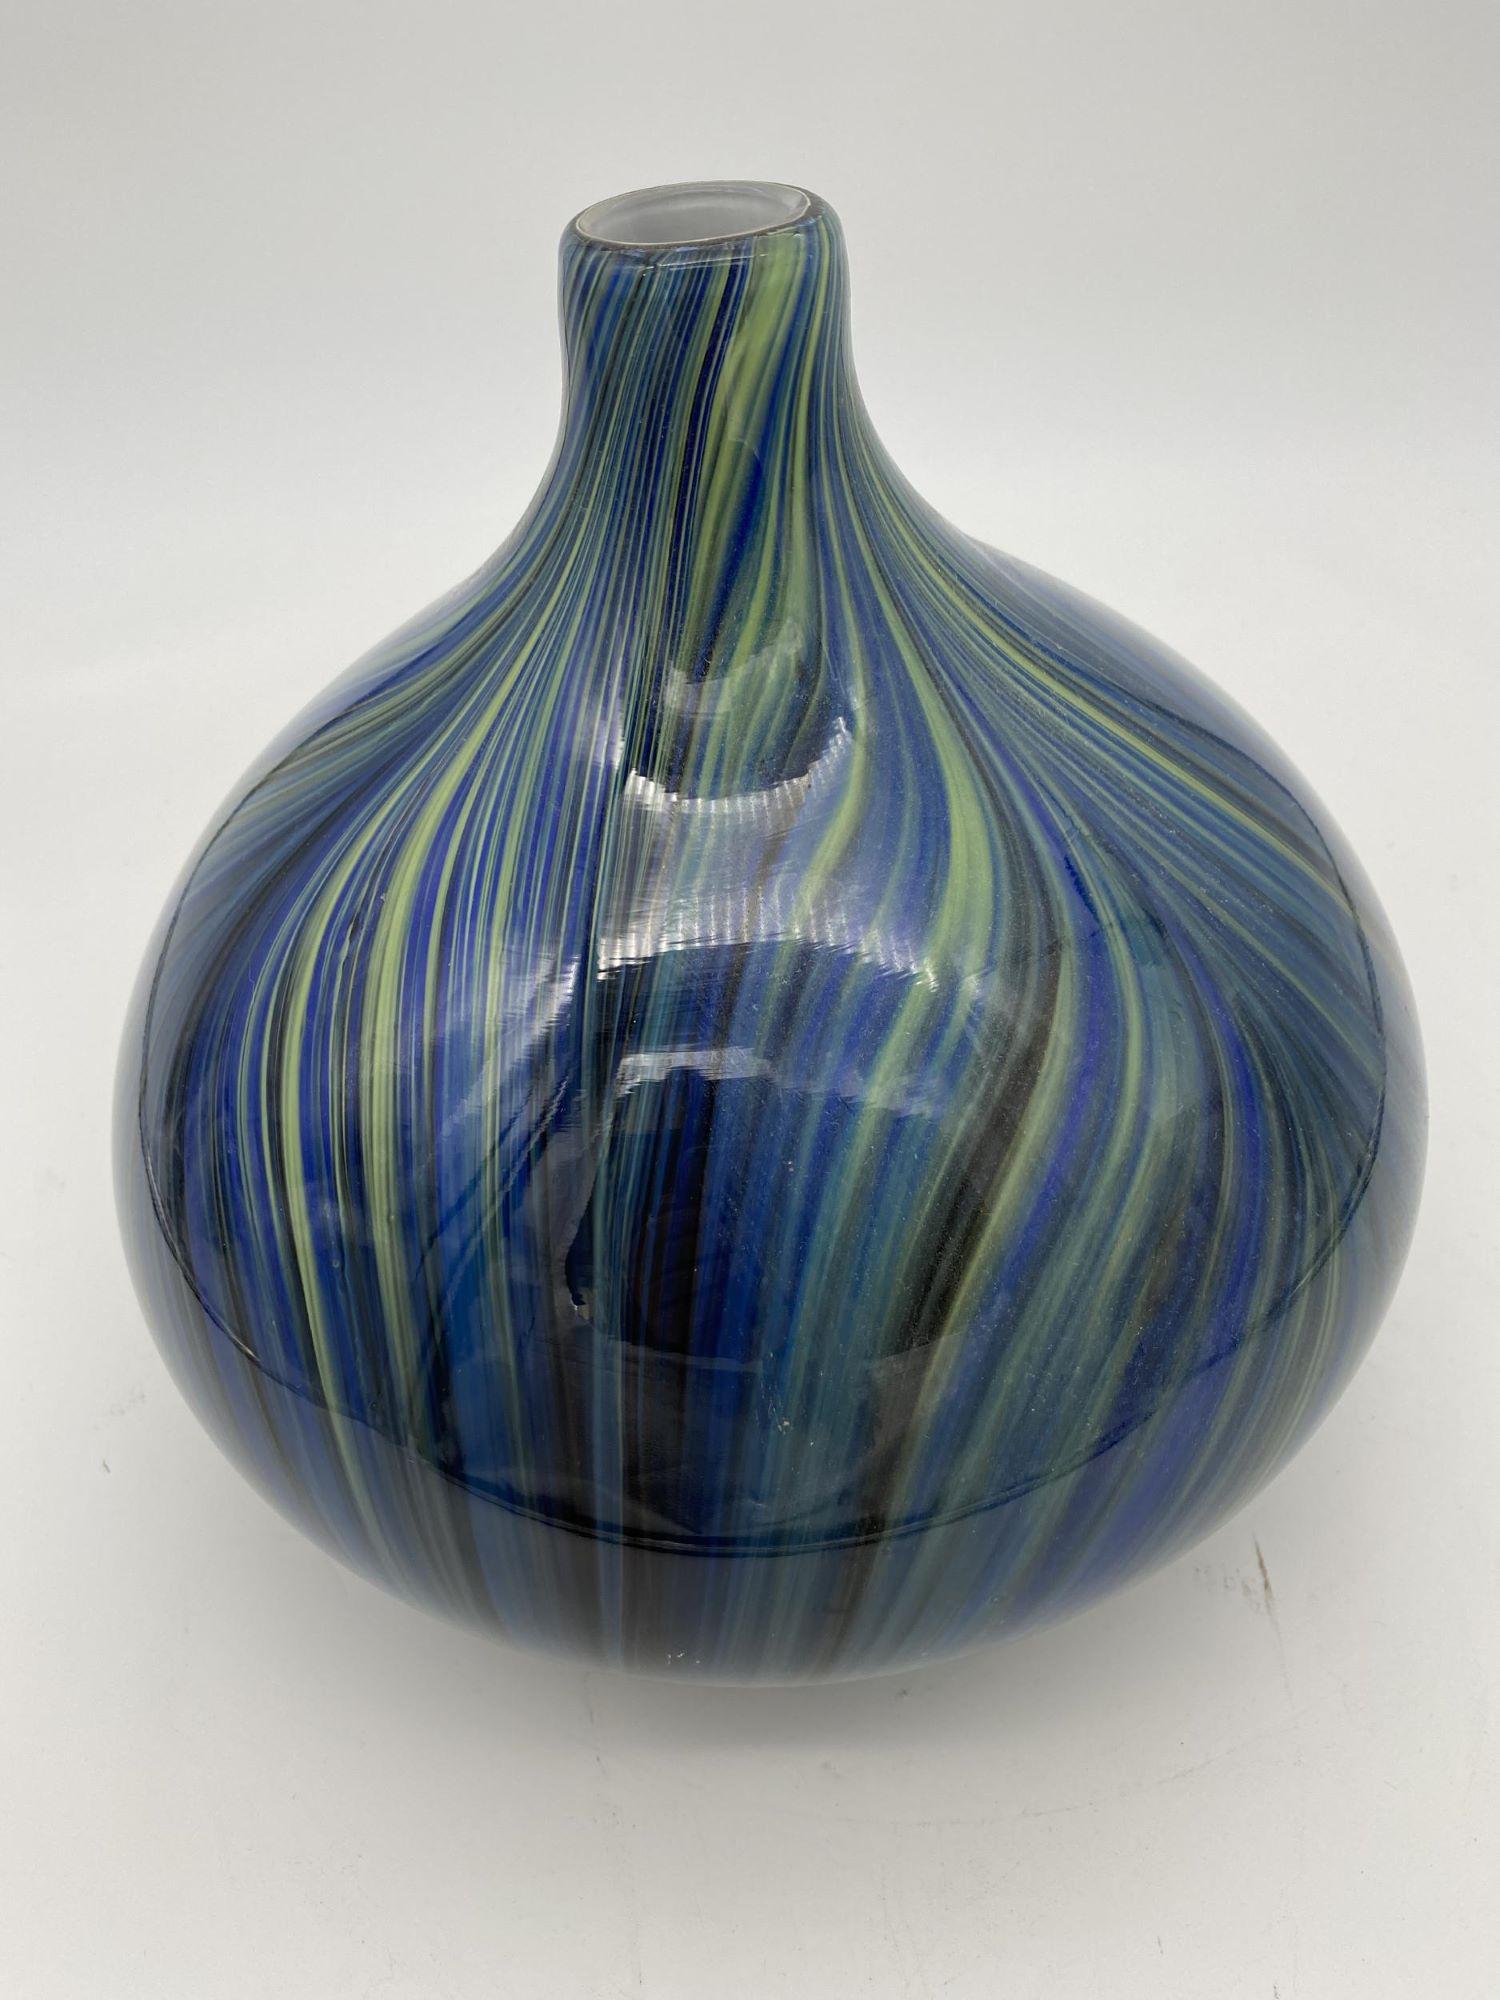 Original 1960s handblown swirl Murano glass vase featuring blue, green, and black swirling in bottle shape vase.